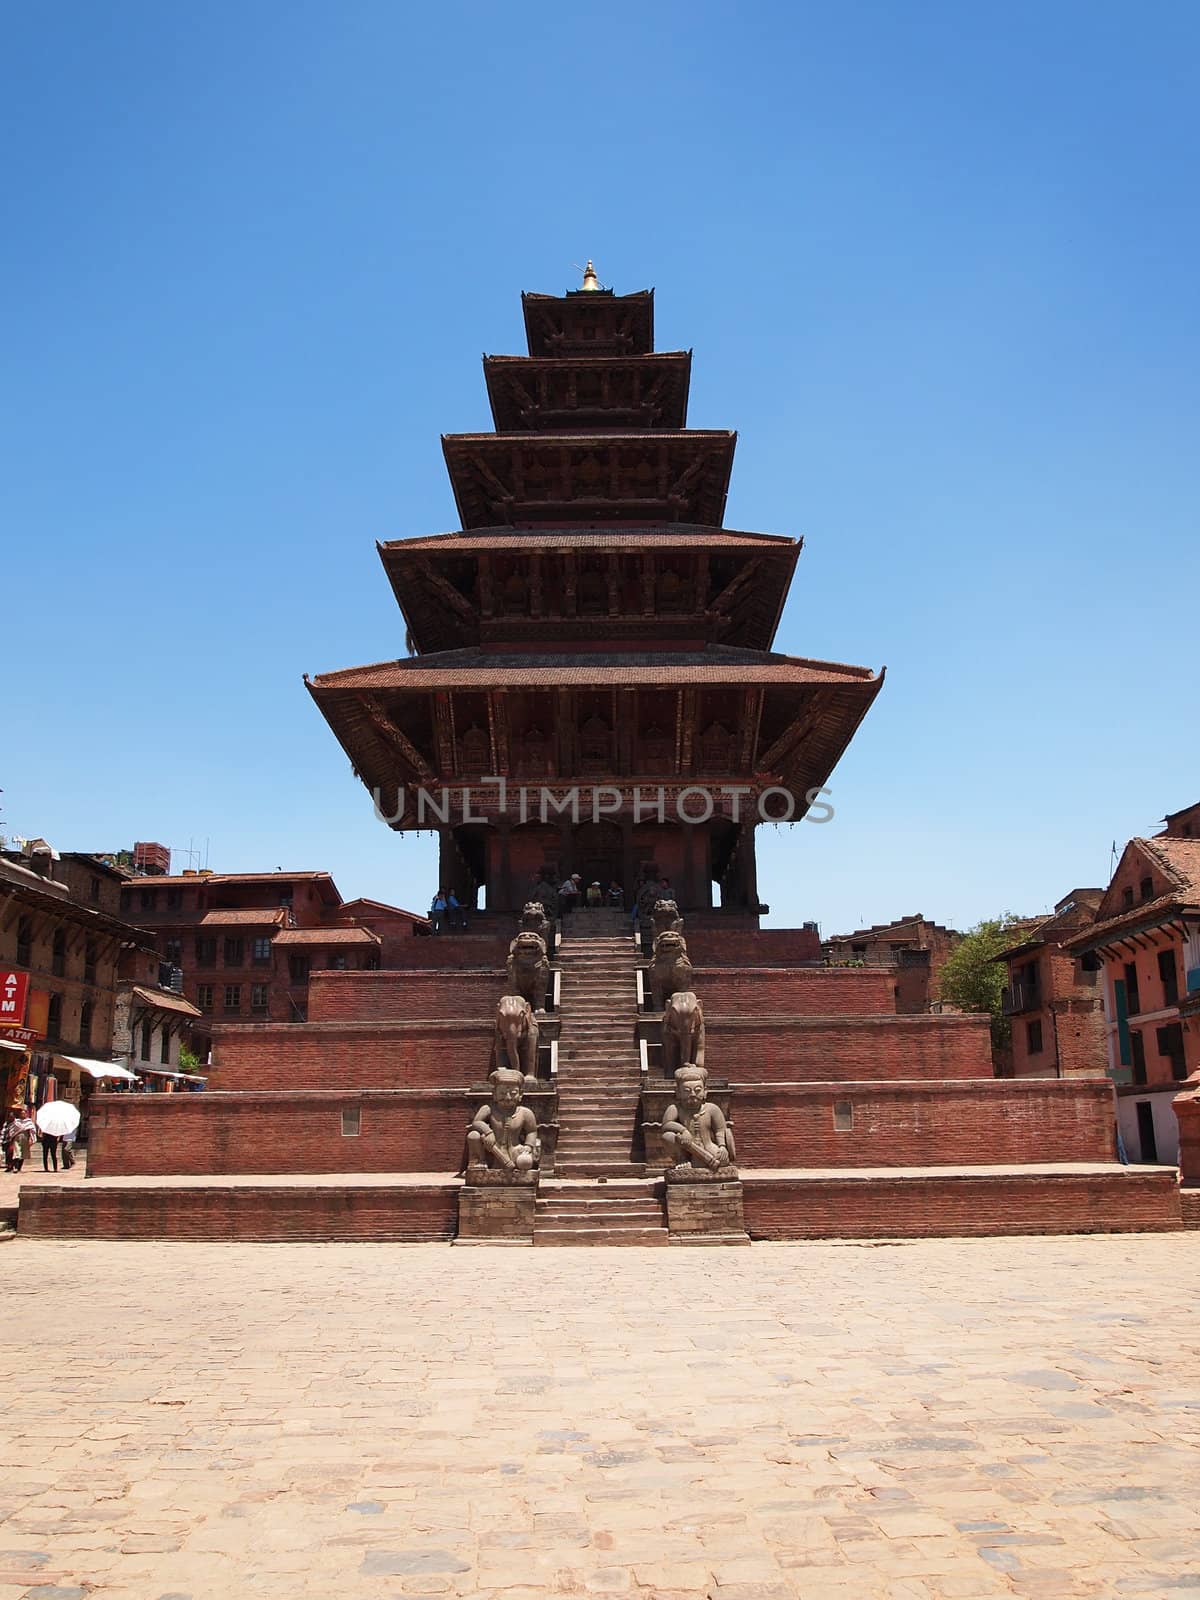 Nepal pagoda by pljvv